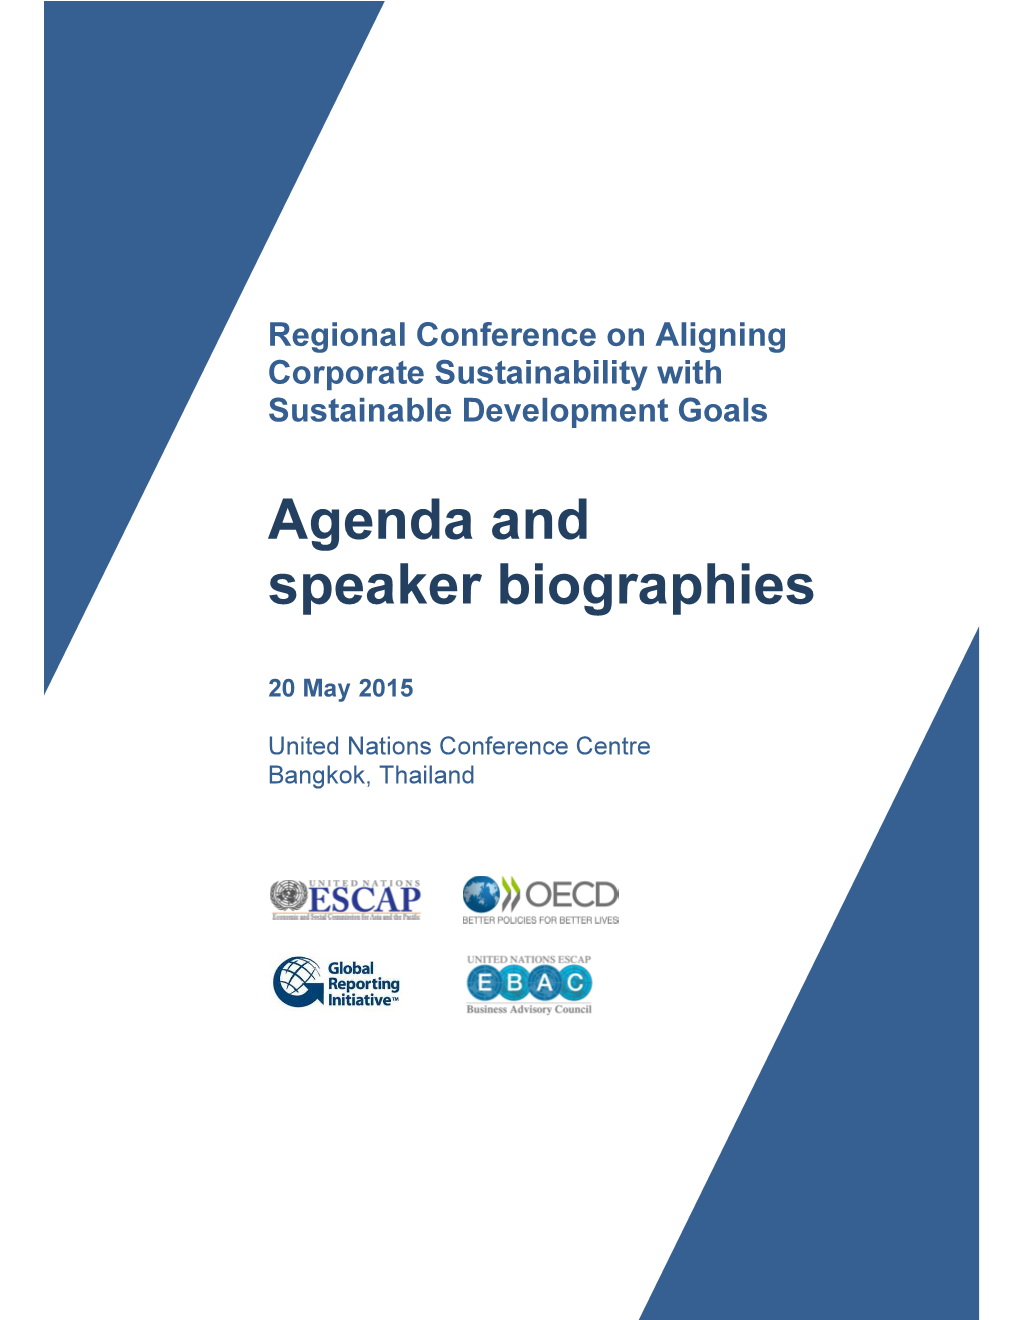 Agenda and Speaker Biographies